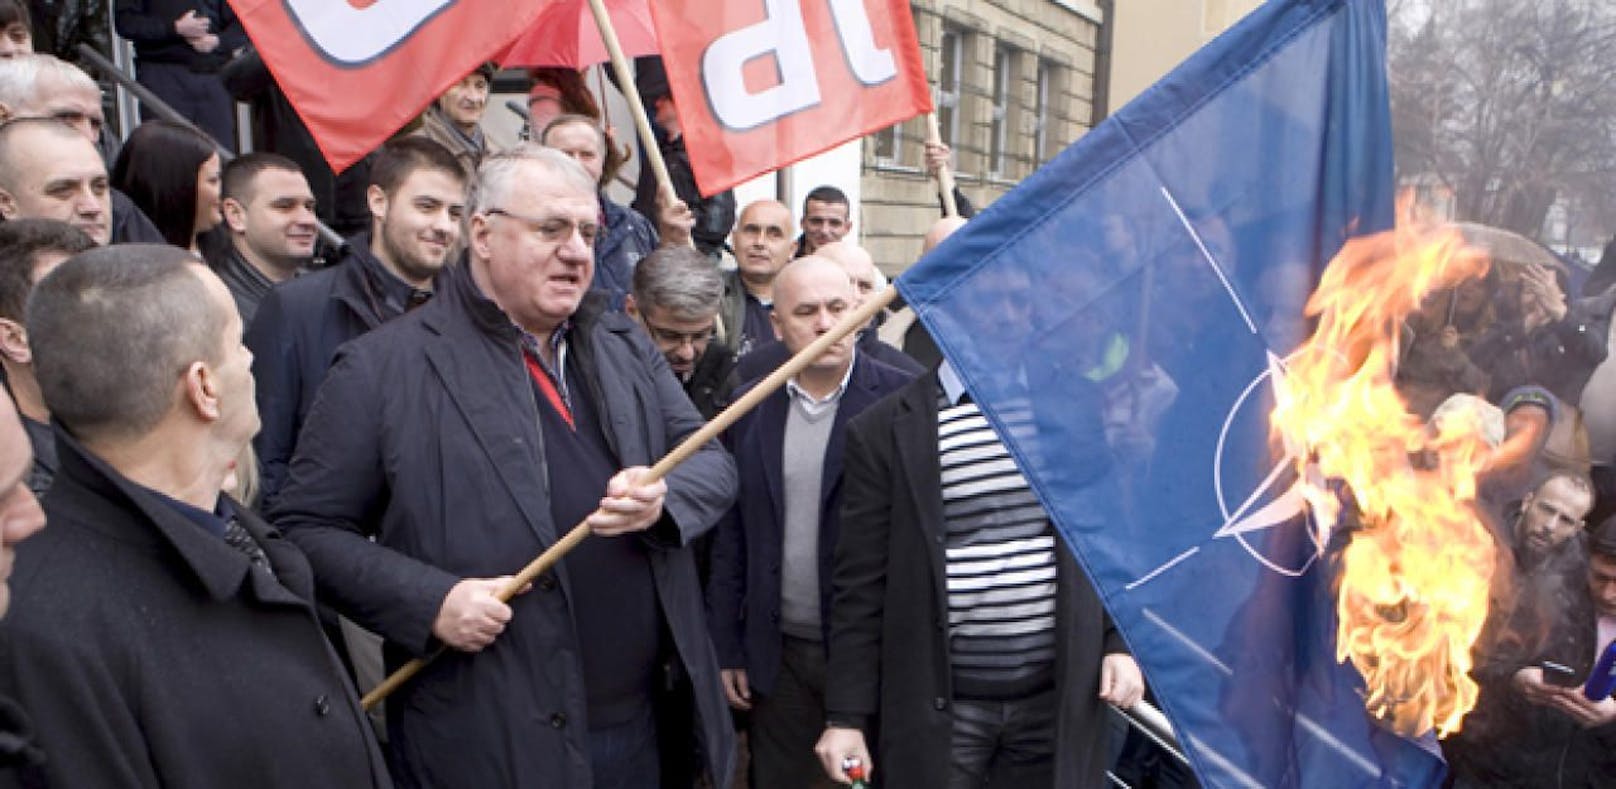 Vojislav Seselj beim Verbrennen einer NATO-Fahne.